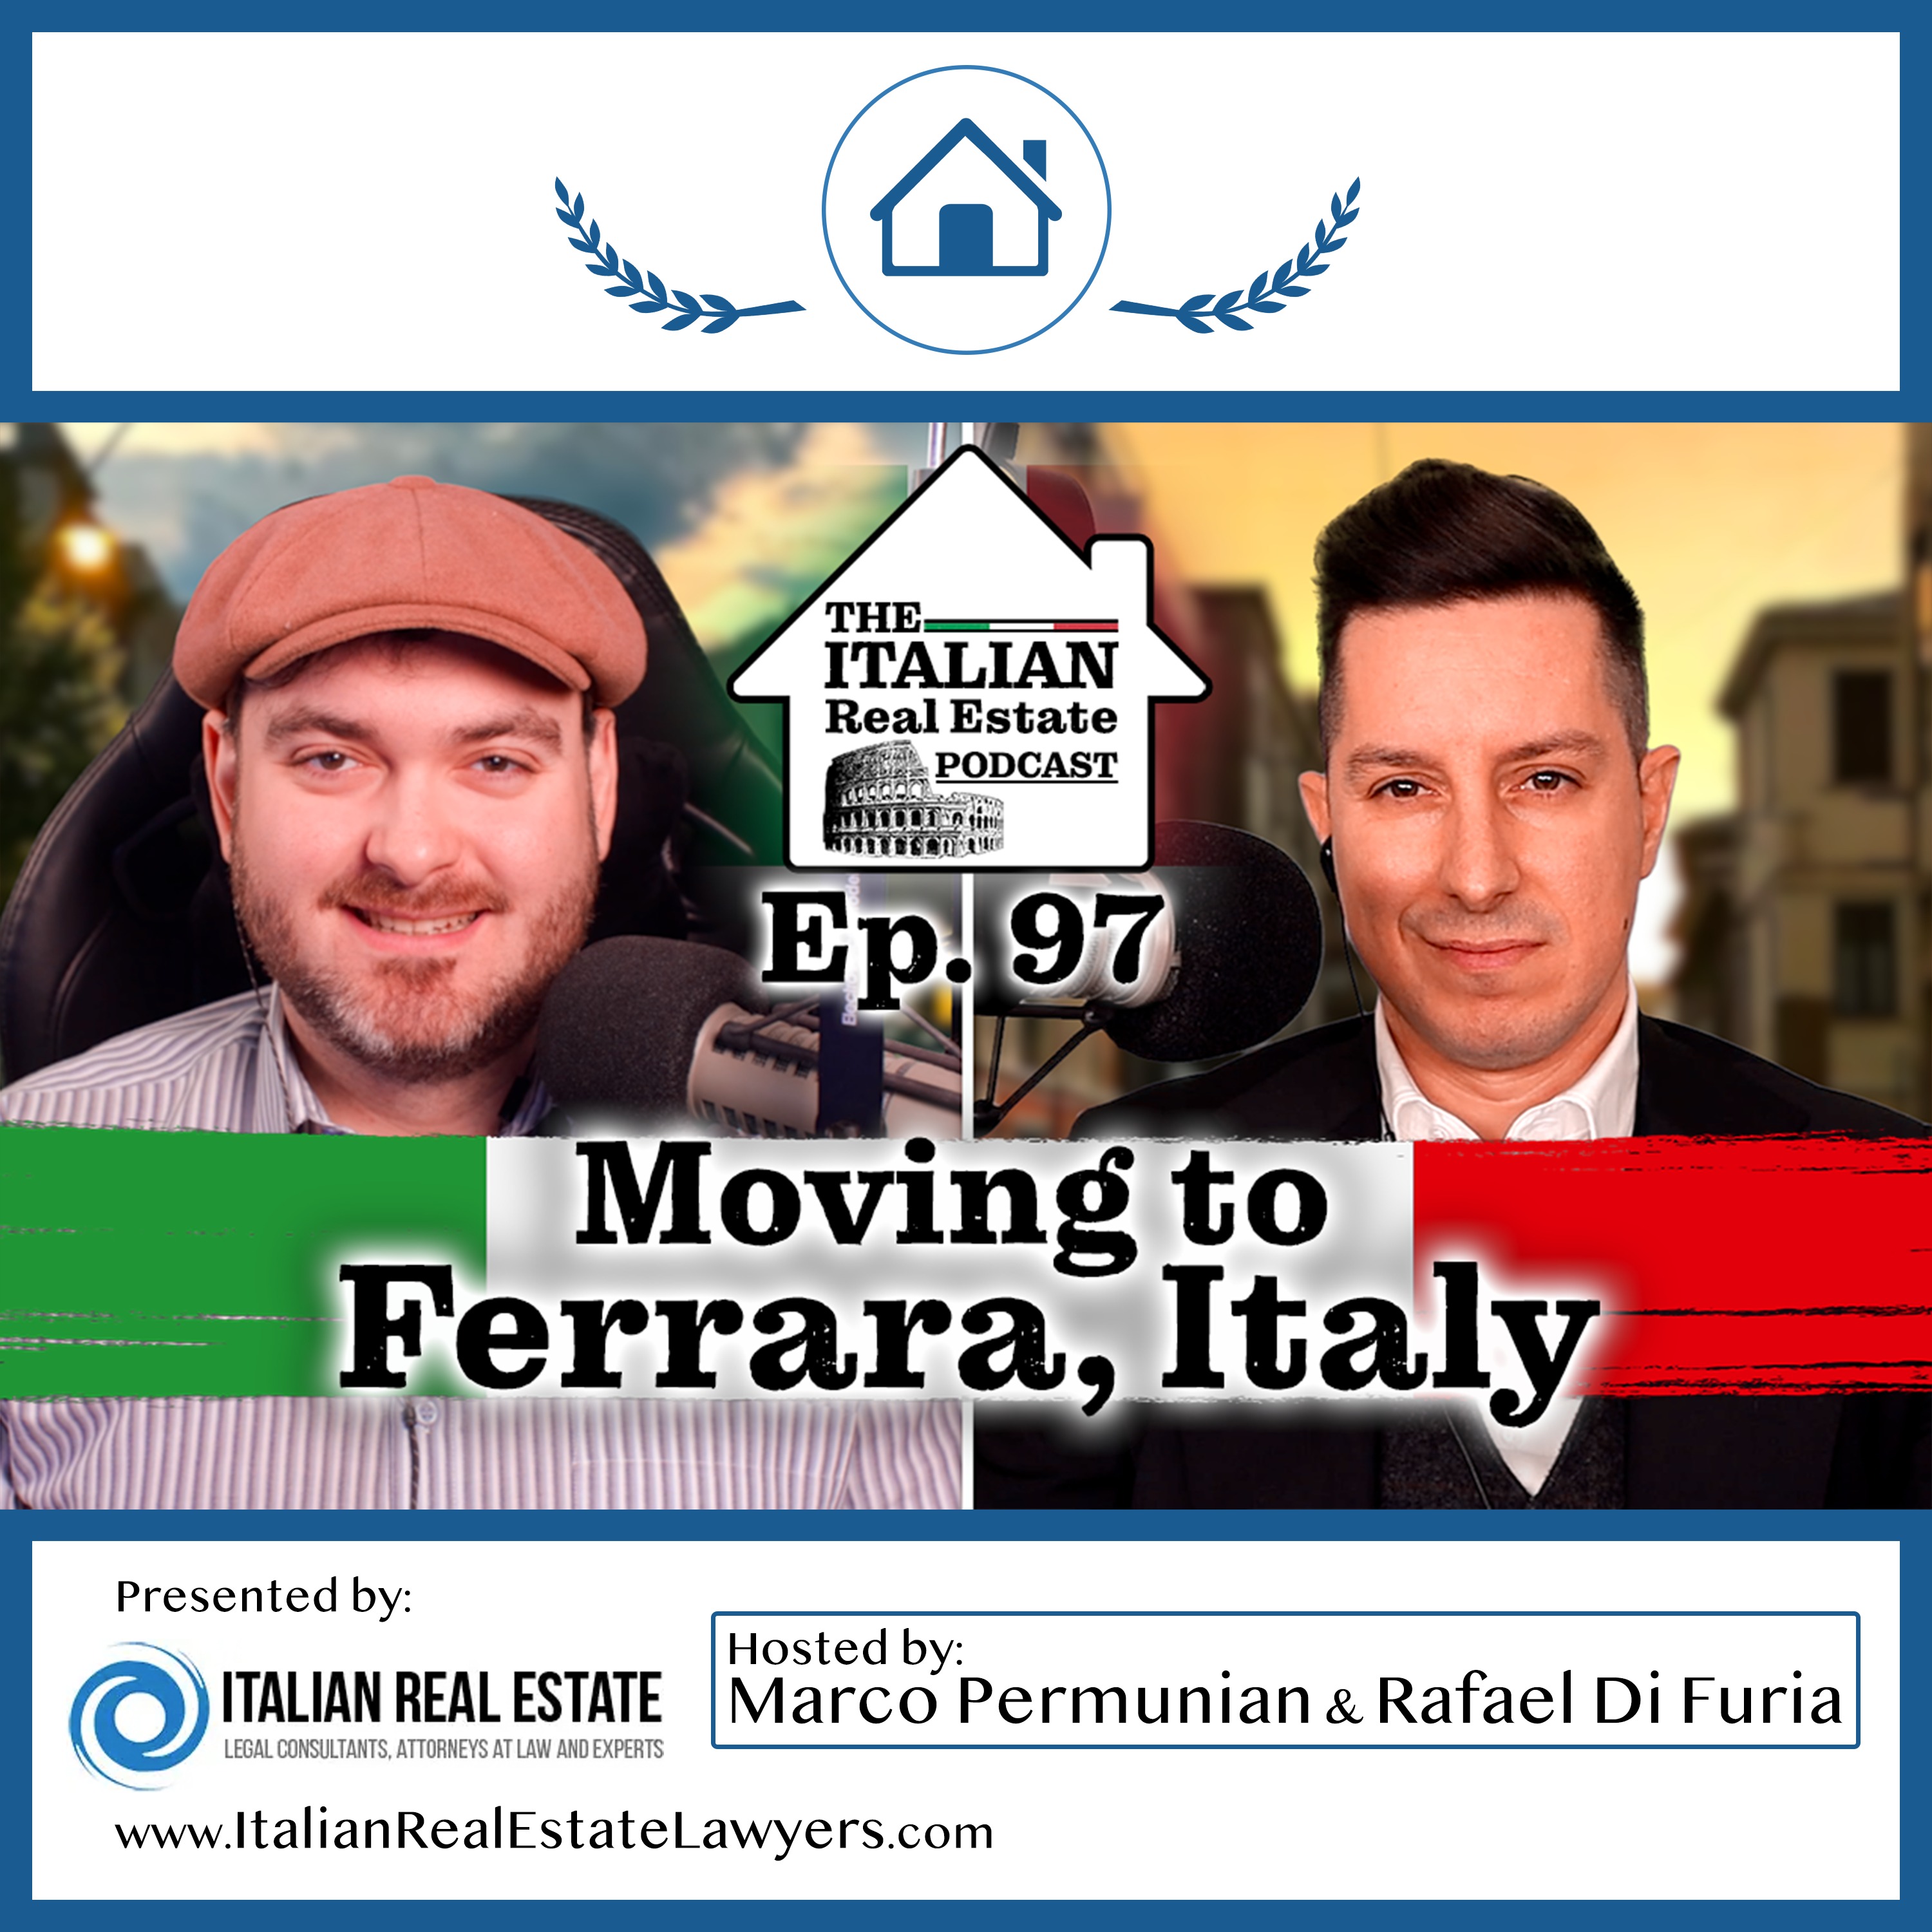 Should You Move to Ferrara Italy?